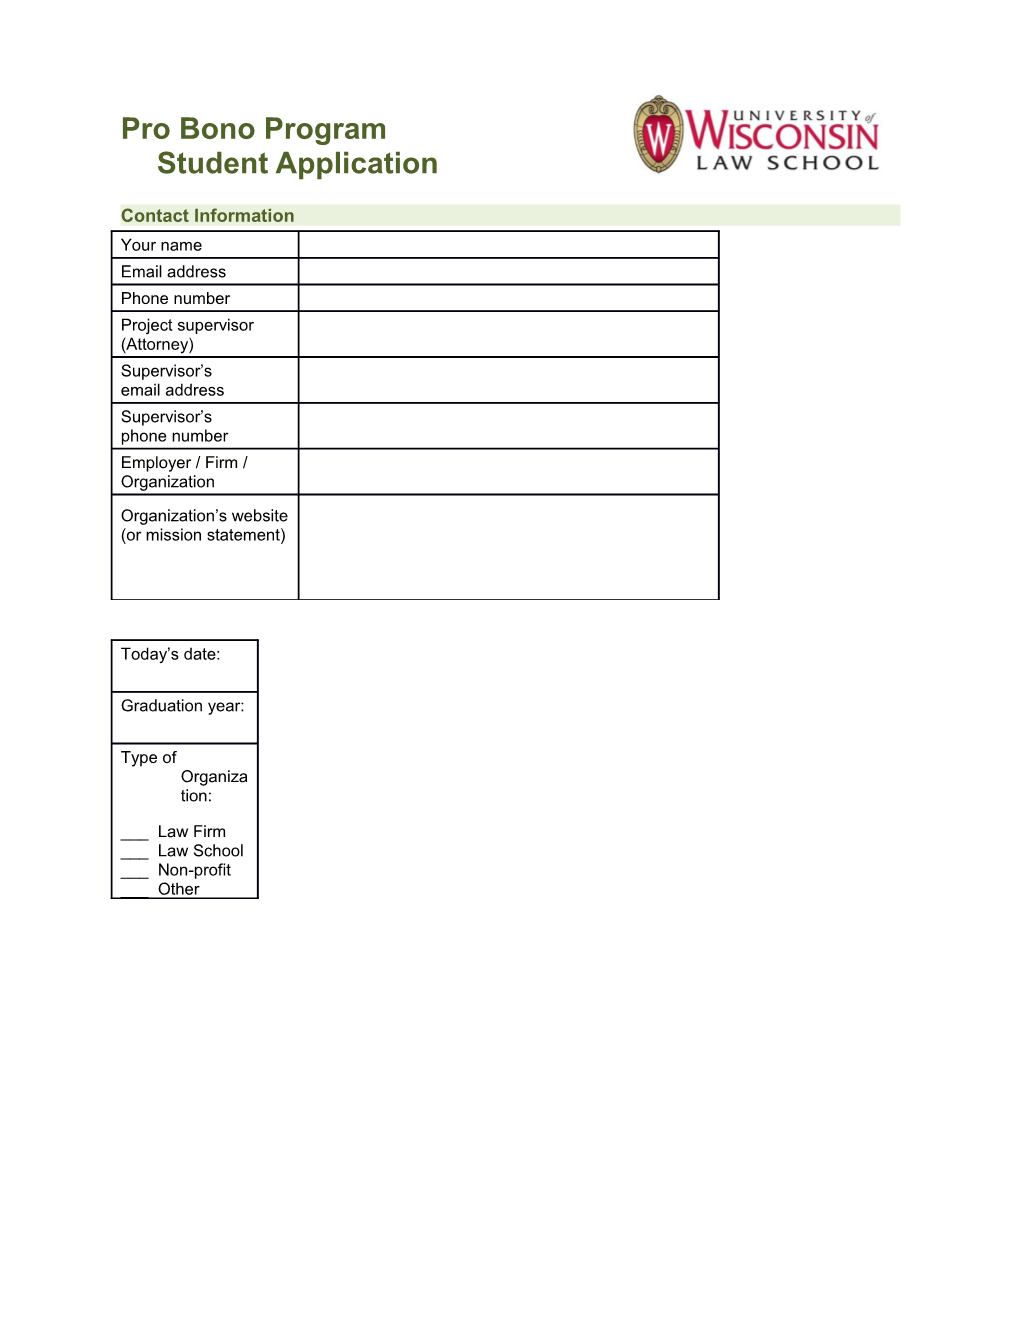 Pro Bono Program Student Application